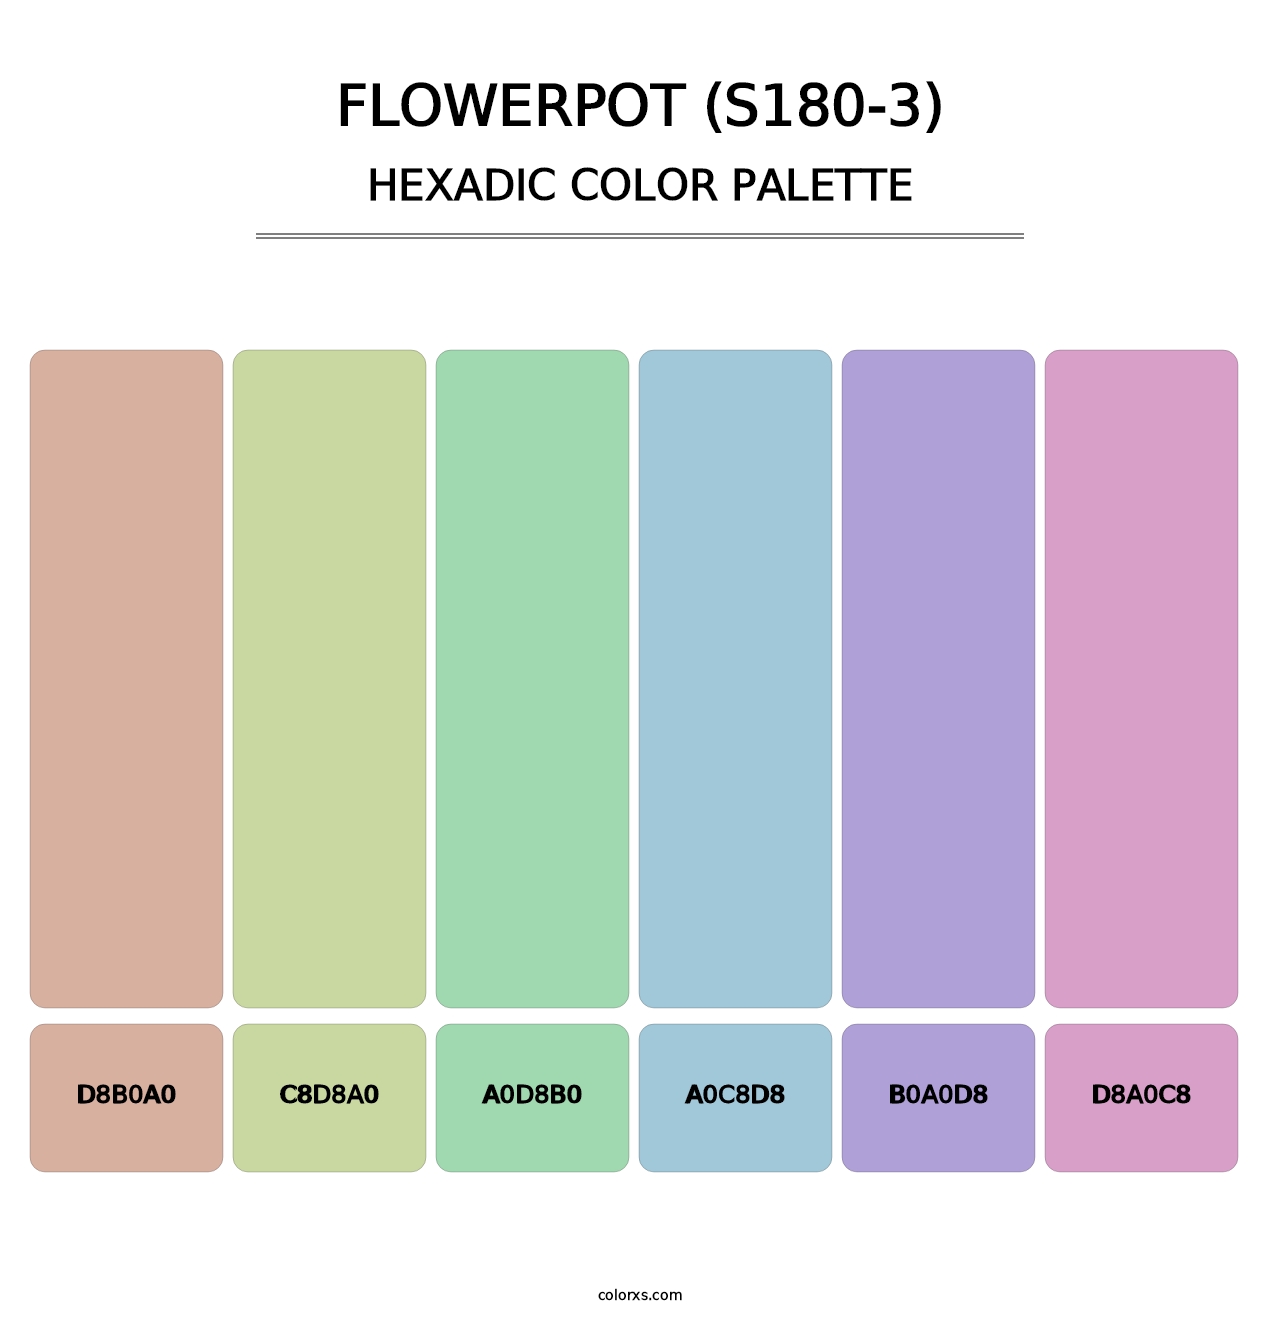 Flowerpot (S180-3) - Hexadic Color Palette